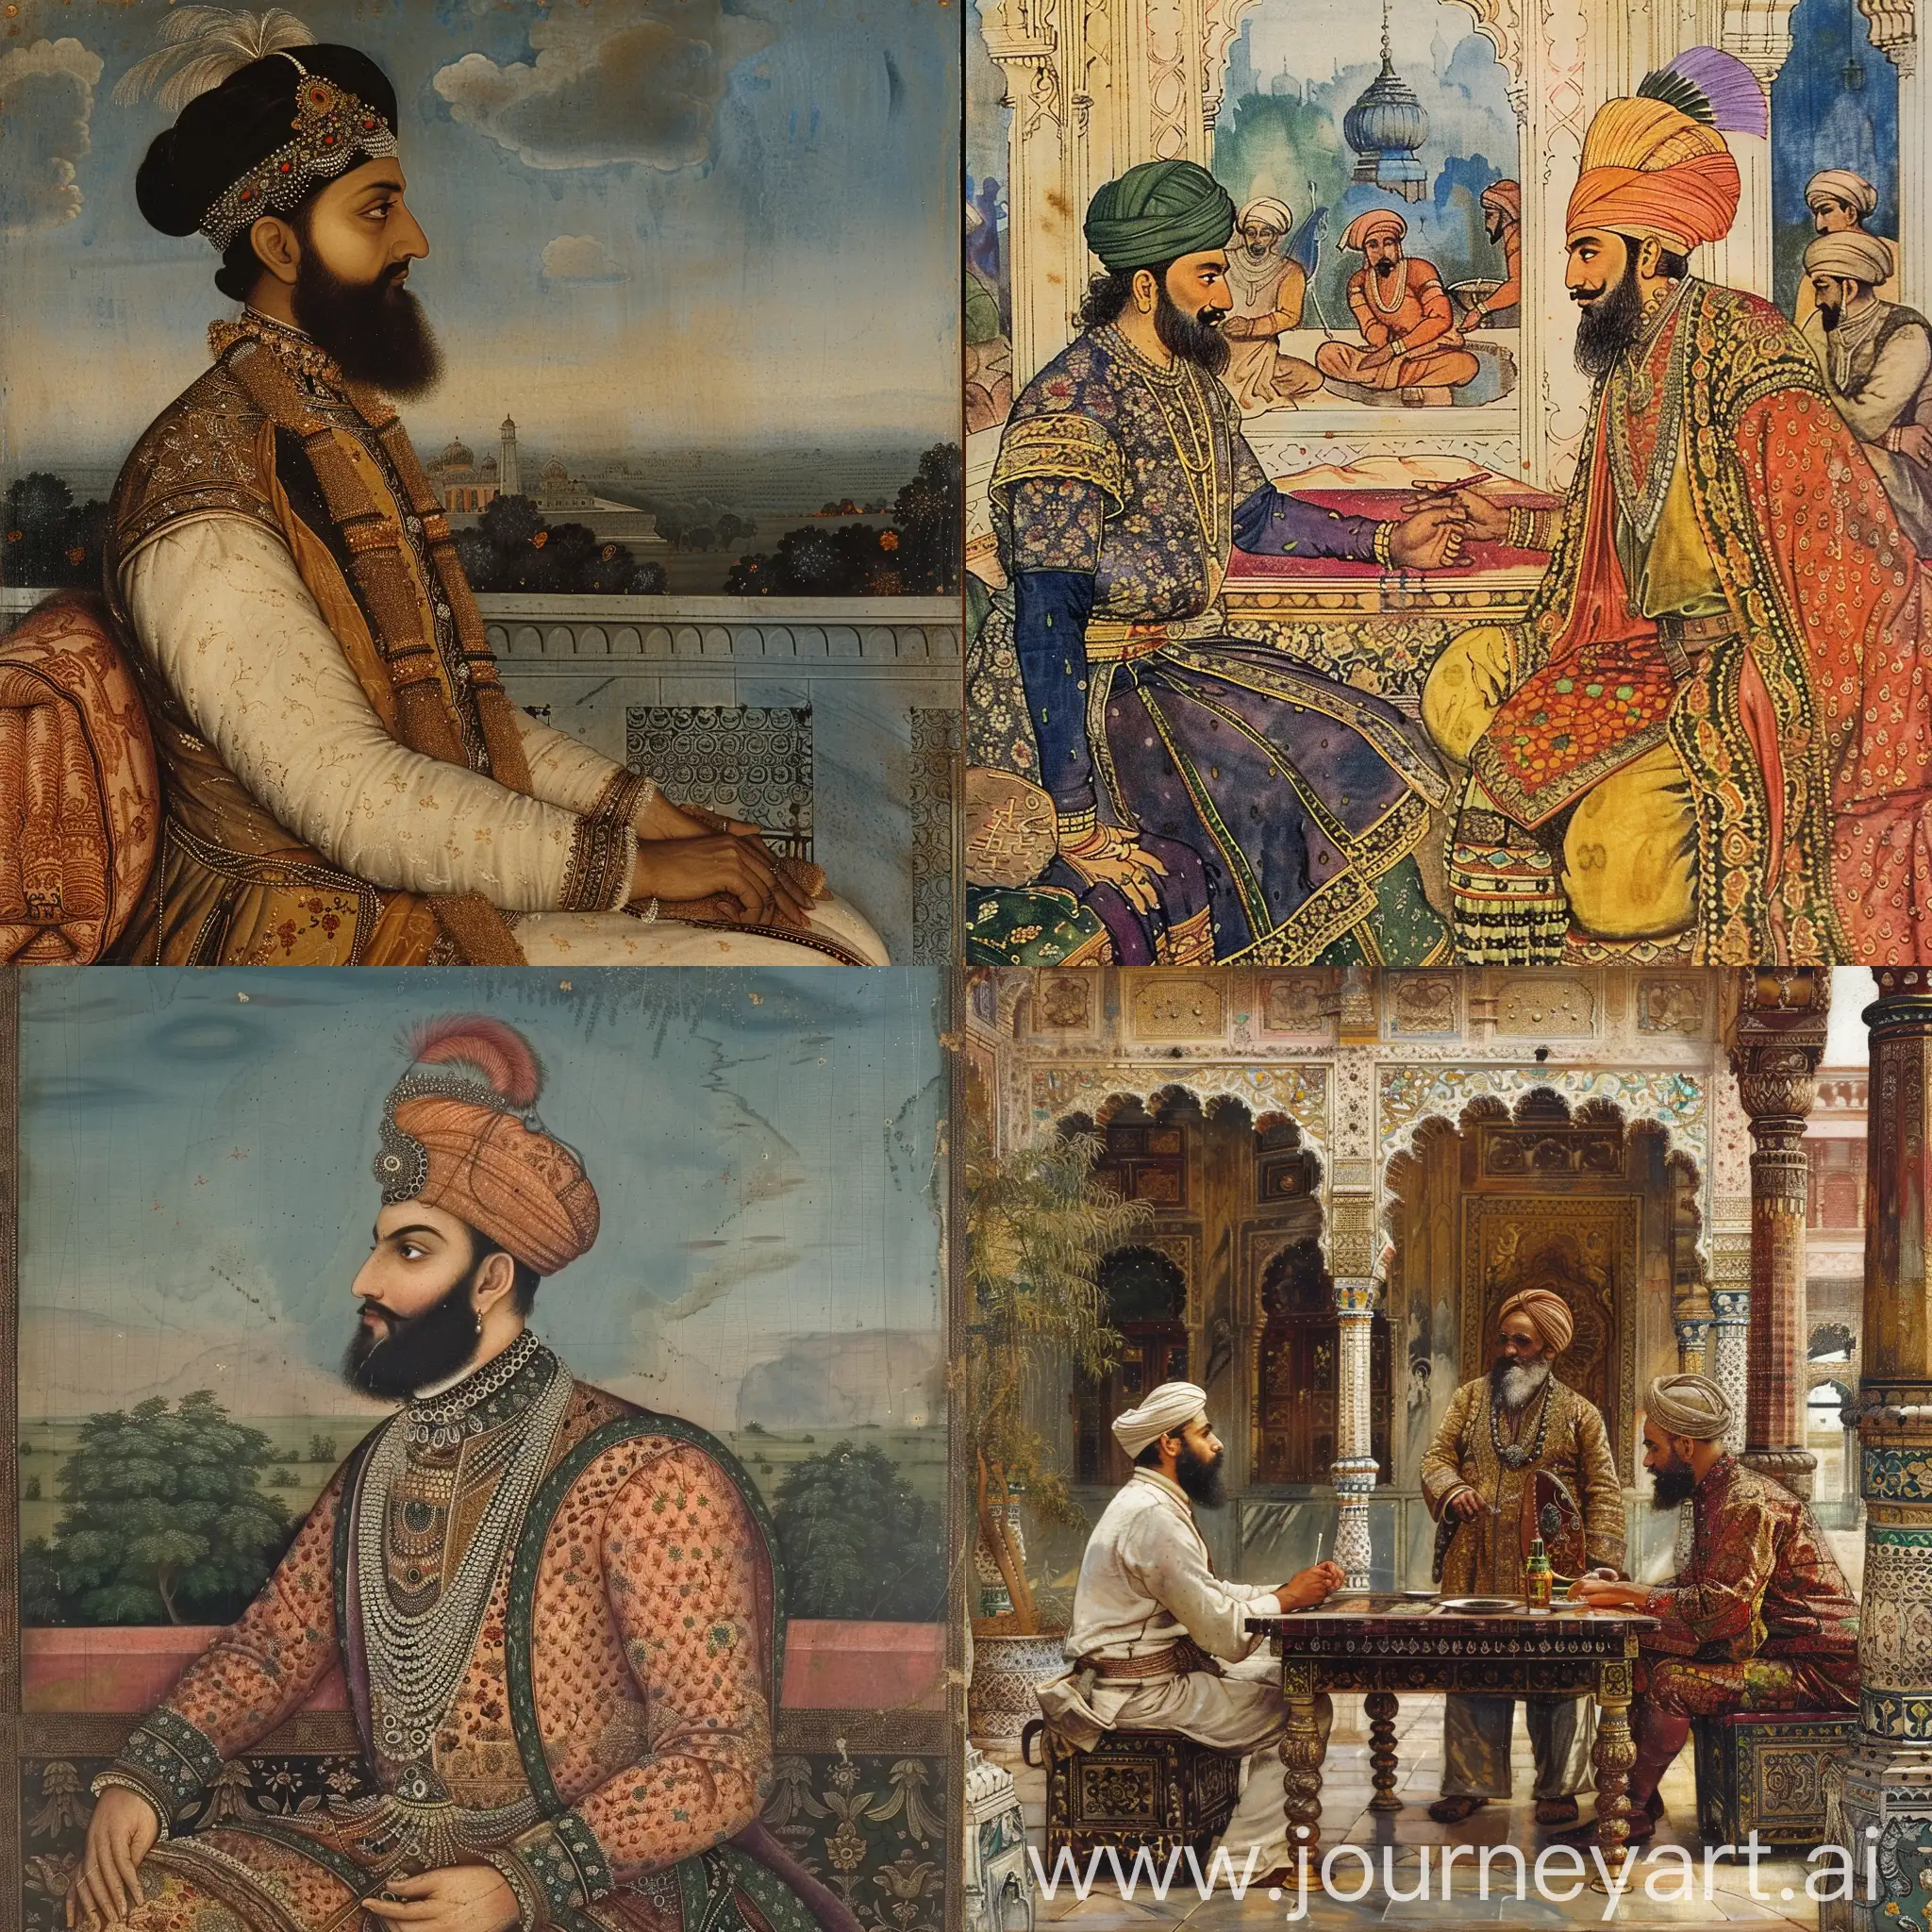 Siraj-ud-Daulah-Portrait-with-Rich-Cultural-Detailing